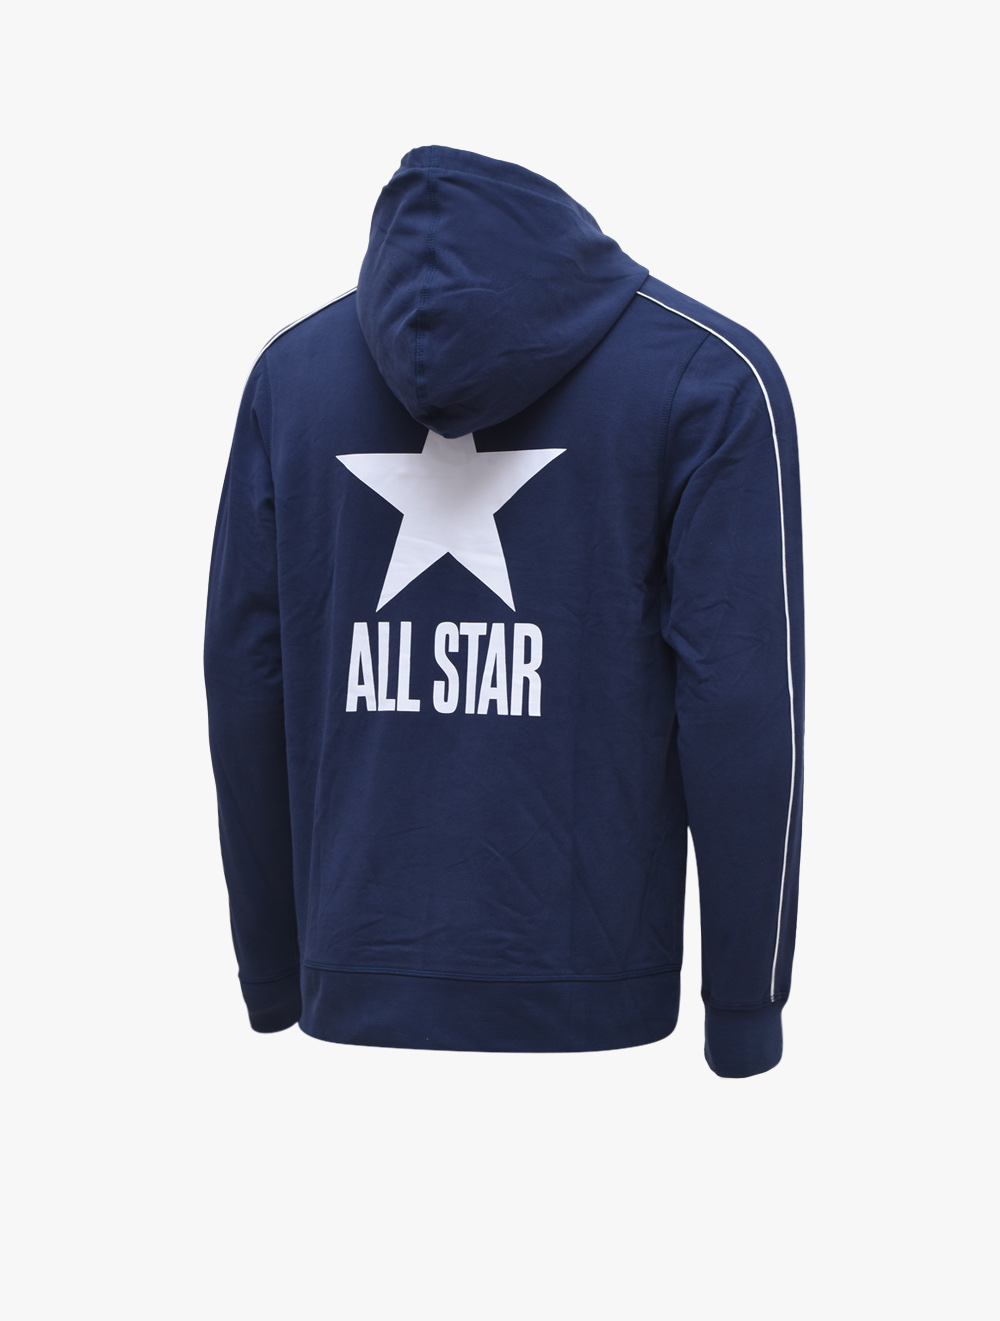 converse all star hoodie